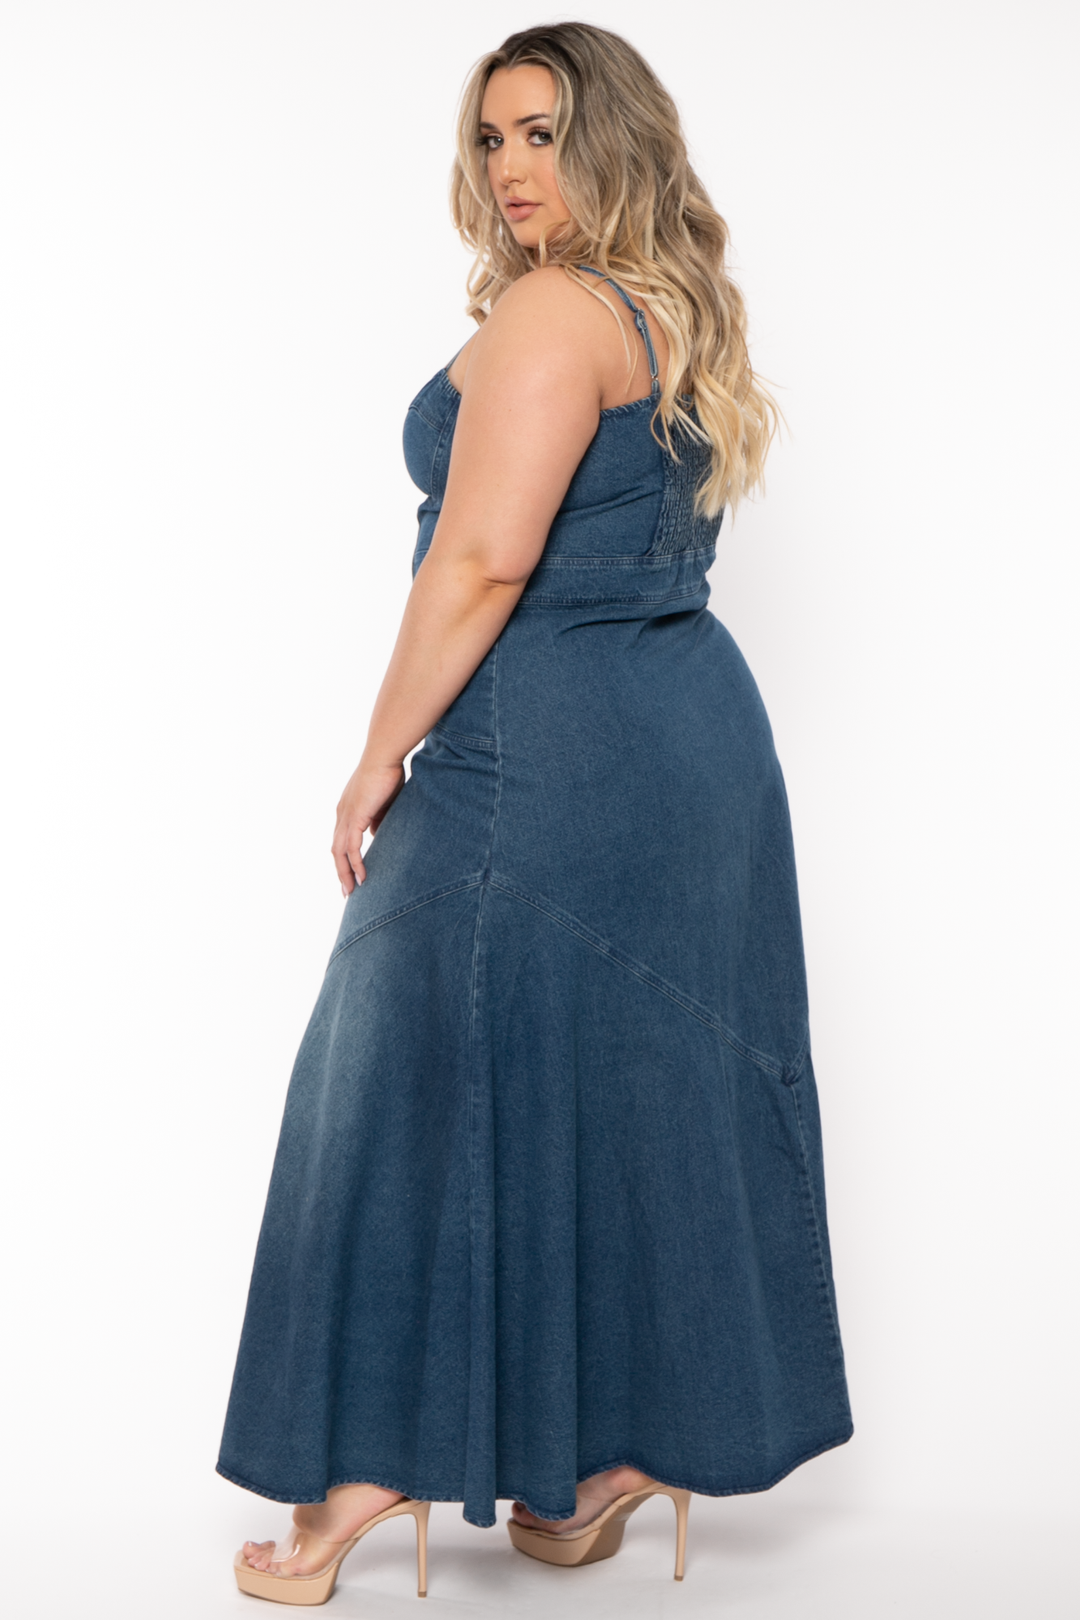 Jade by Jane Dresses Plus Size Lana Denim Maxi Dress - Blue